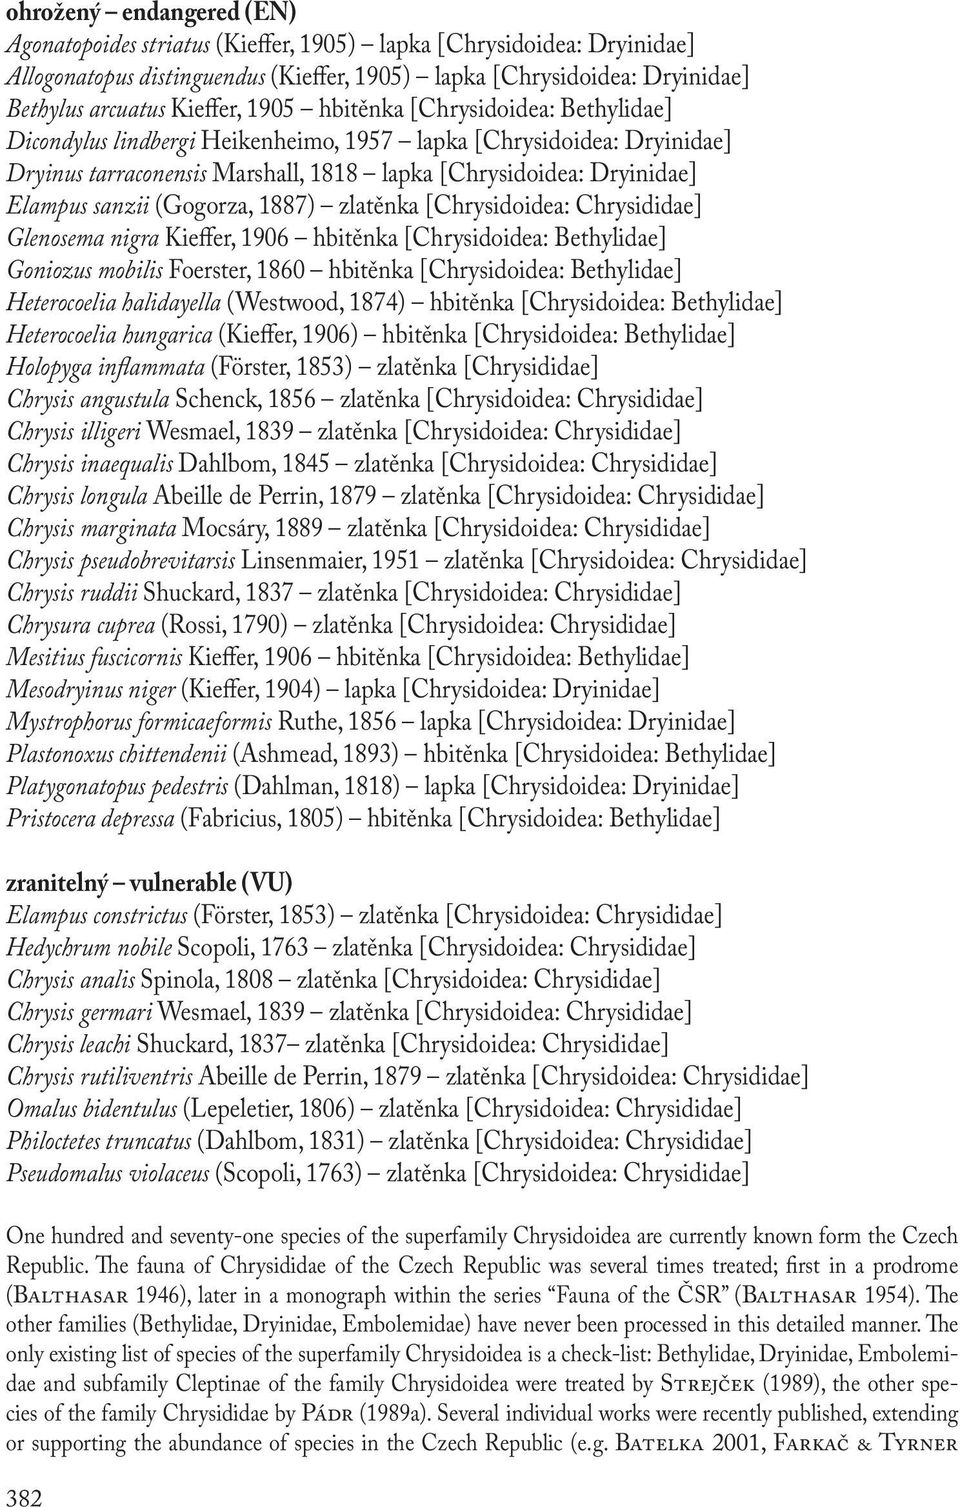 (Gogorza, 1887) zlatěnka [Chrysidoidea: Chrysididae] Glenosema nigra Kieffer, 1906 hbitěnka [Chrysidoidea: Bethylidae] Goniozus mobilis Foerster, 1860 hbitěnka [Chrysidoidea: Bethylidae] Heterocoelia